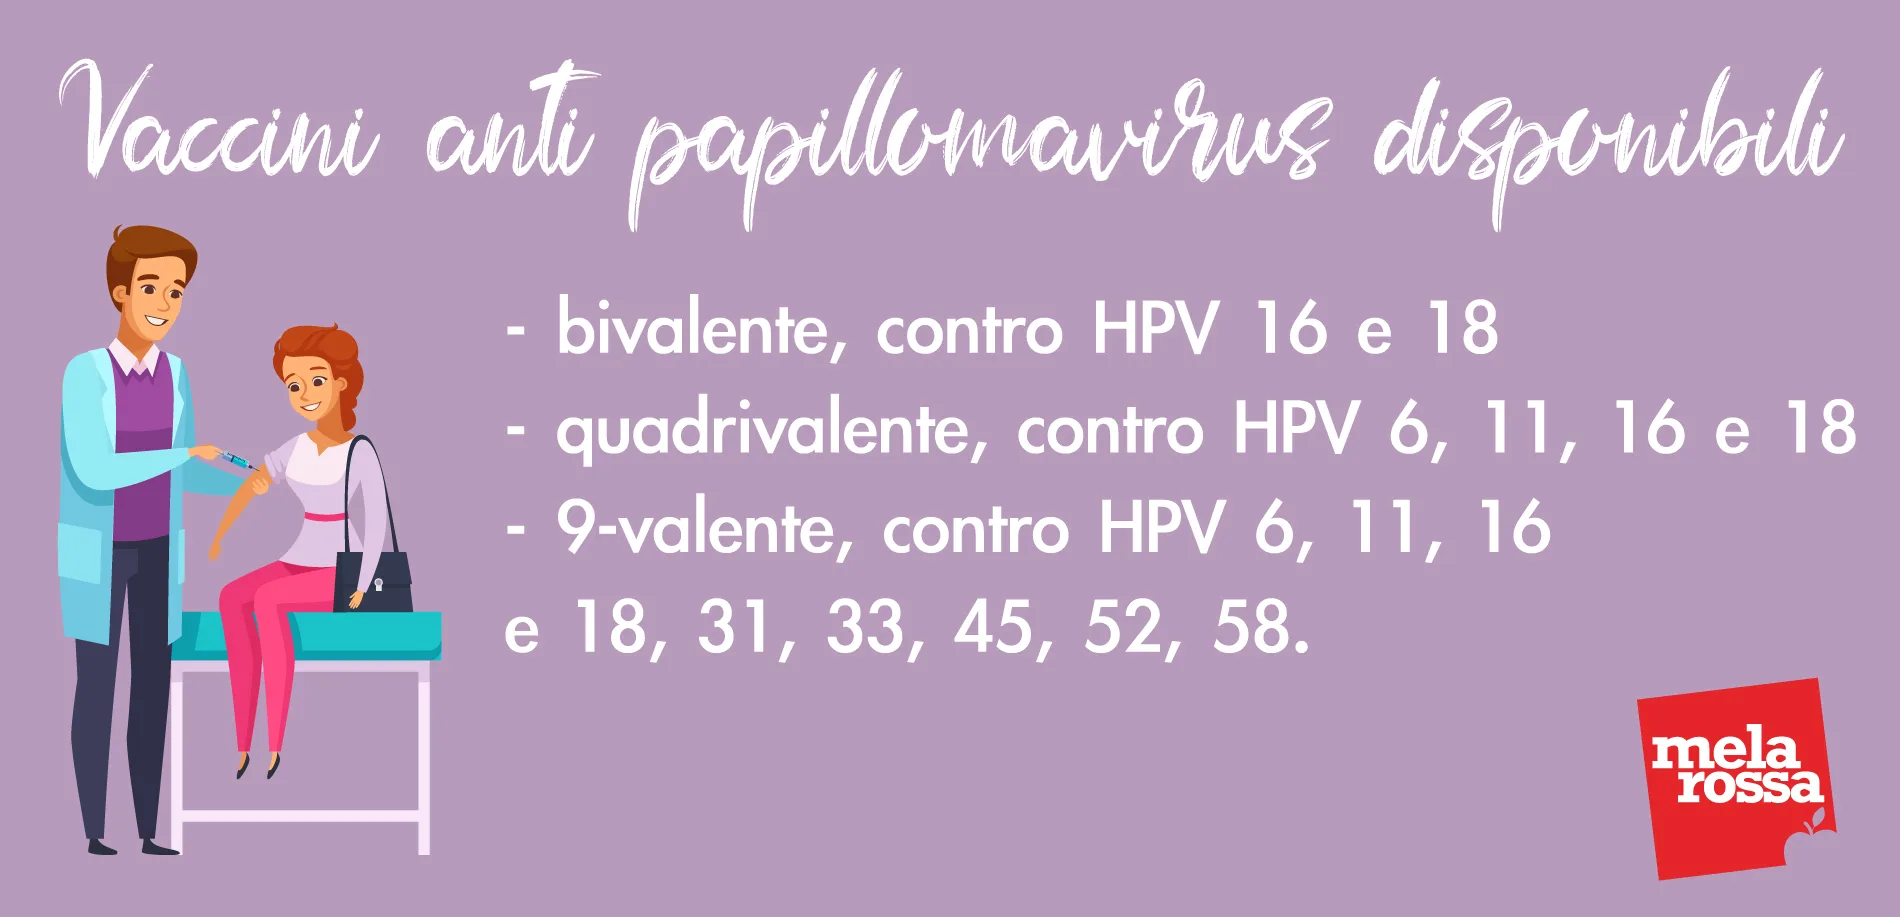 papilloma virus e ciclo mestruale)